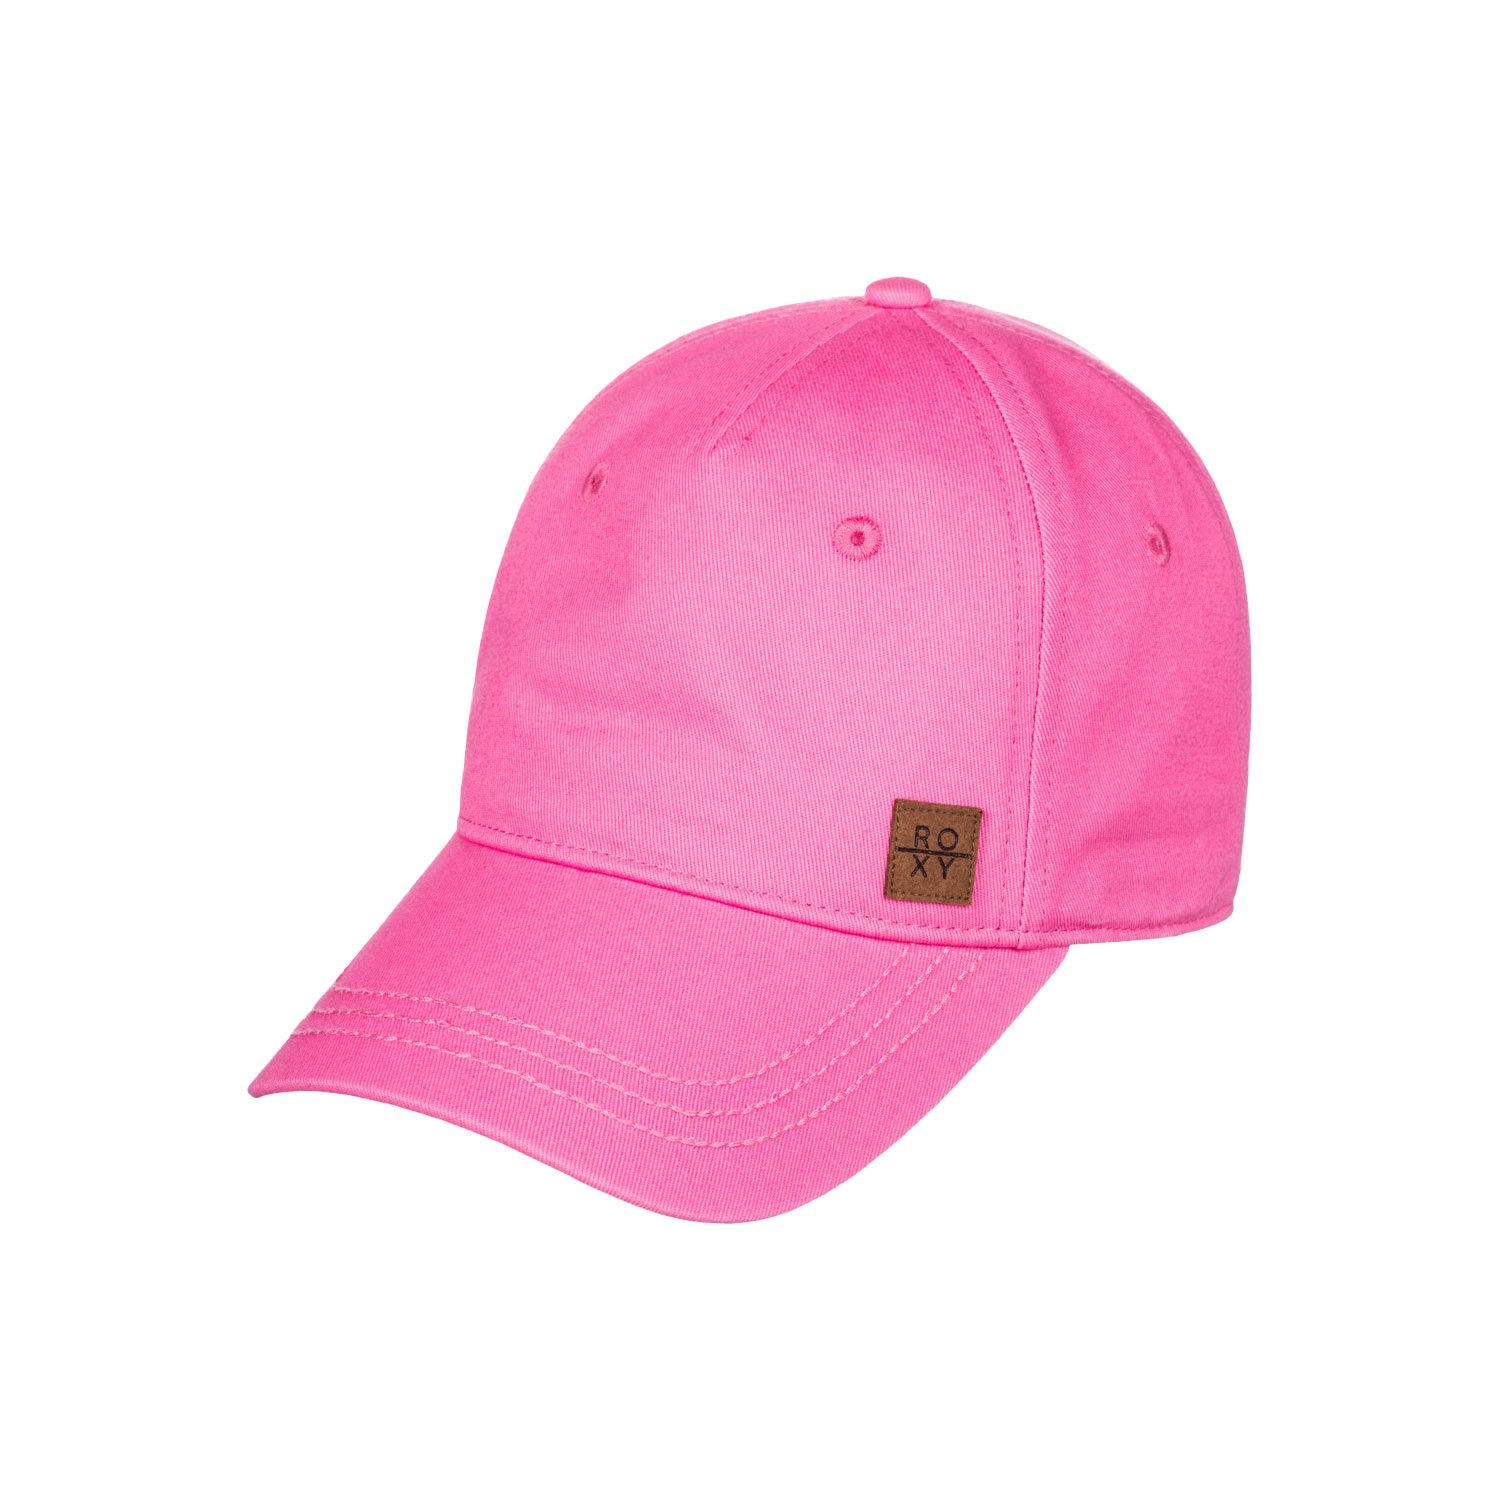 Roxy Extra İnnings Kadın Şapka - Renkli - 1